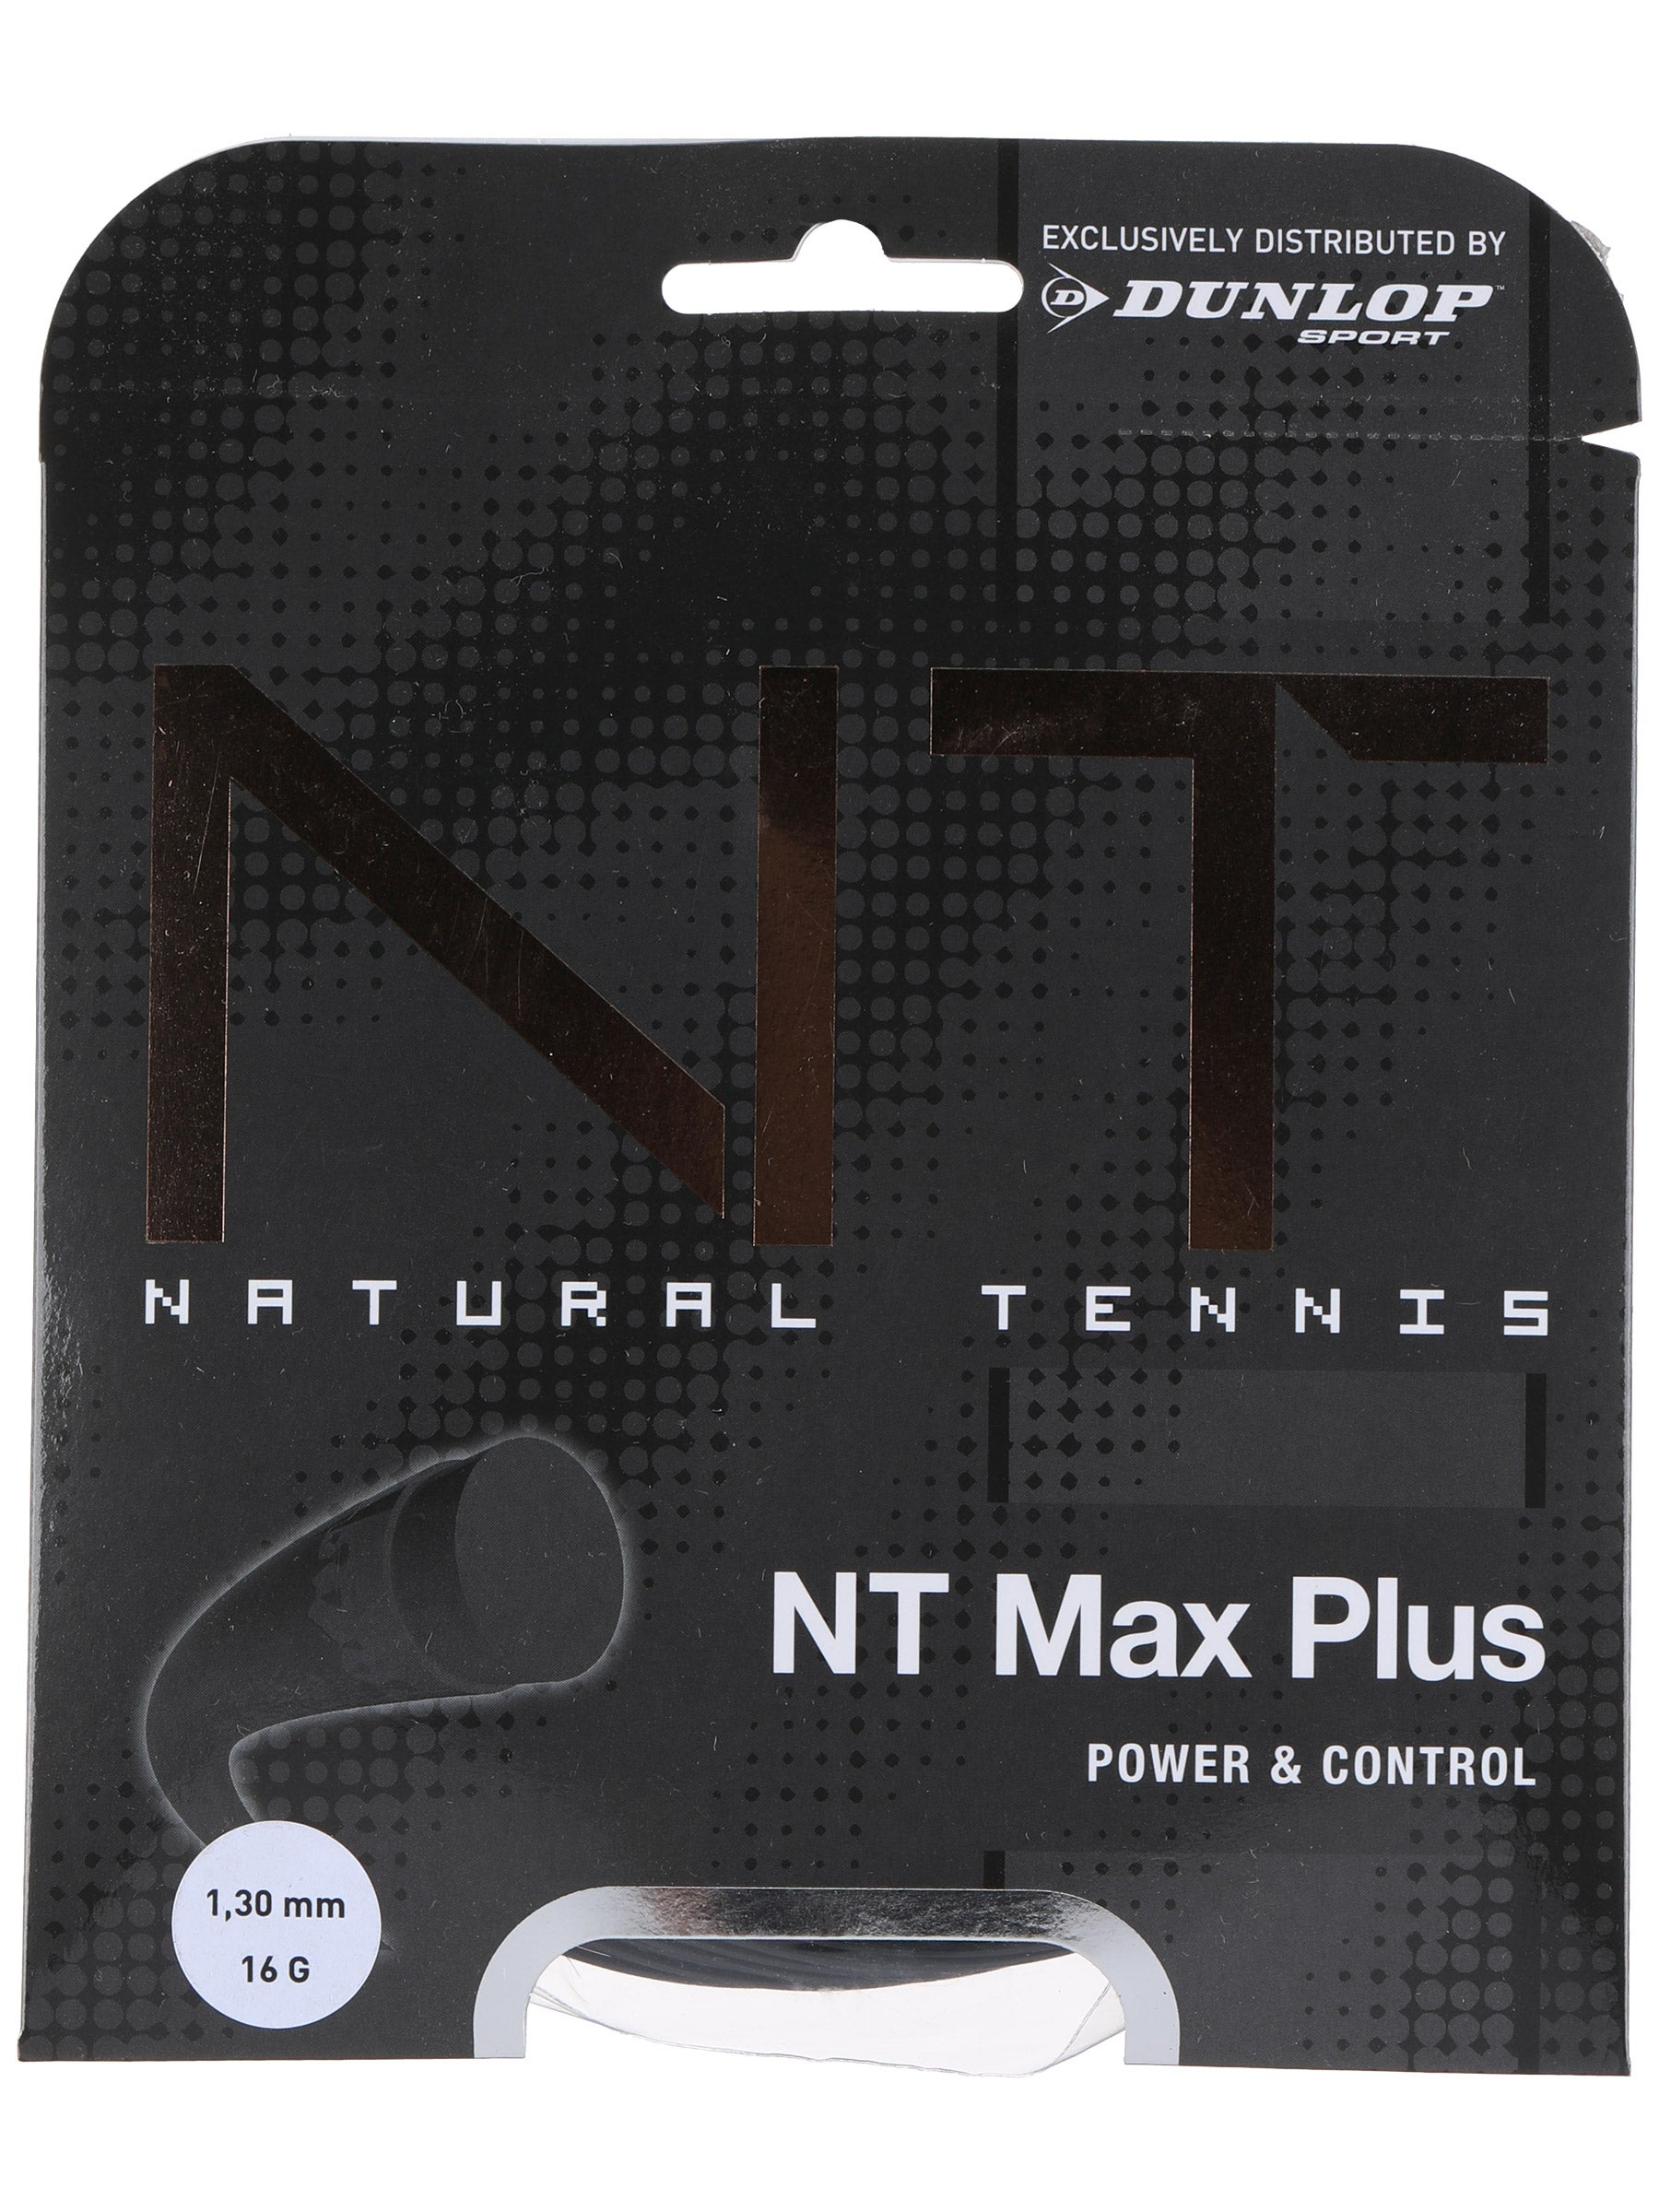 NEU Antrazit Dunlop NT MAX PLUS 12 m 1,30 mm Power & Control Tennissaite 